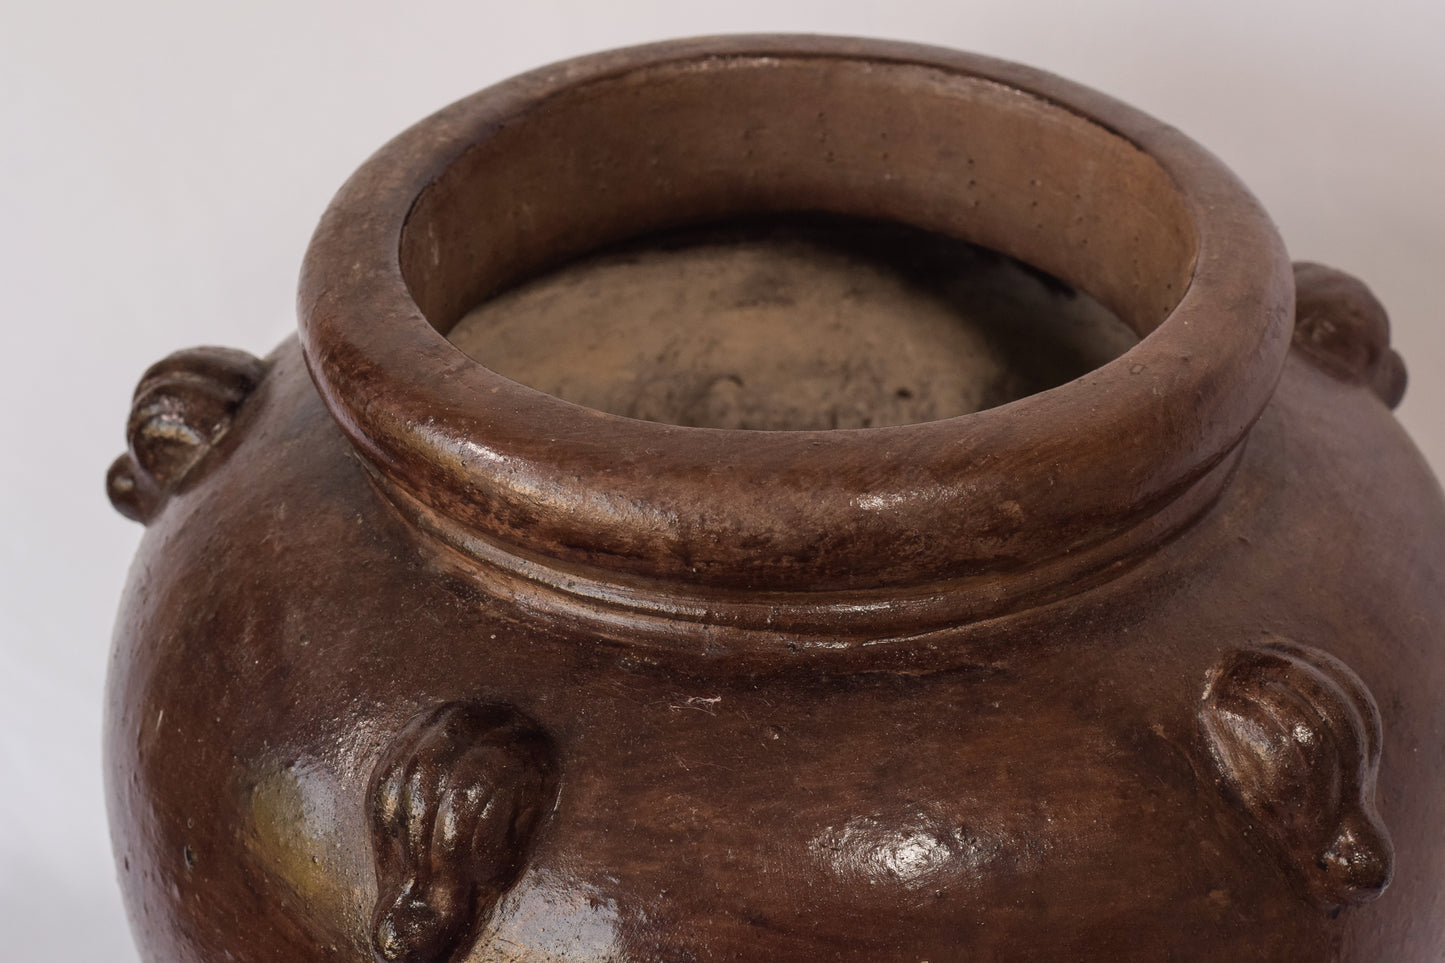 Large Stoneware Pot